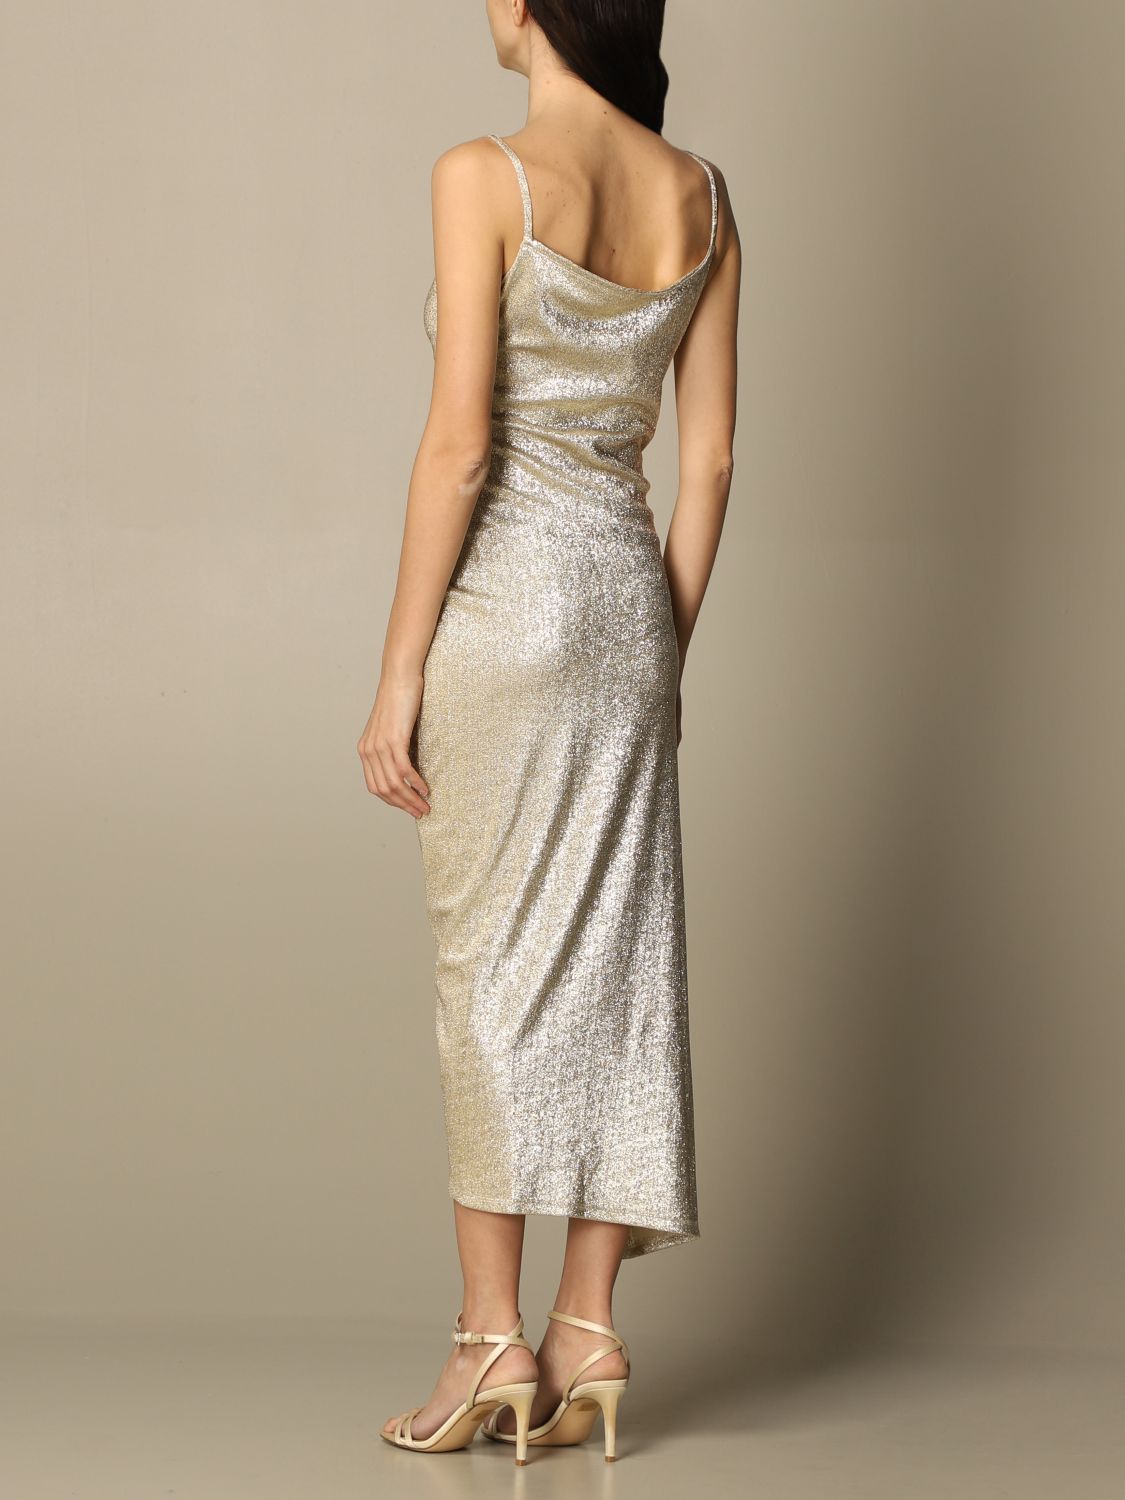 PACO RABANNE: long dress in lurex fabric - Gold | Paco Rabanne dress ...